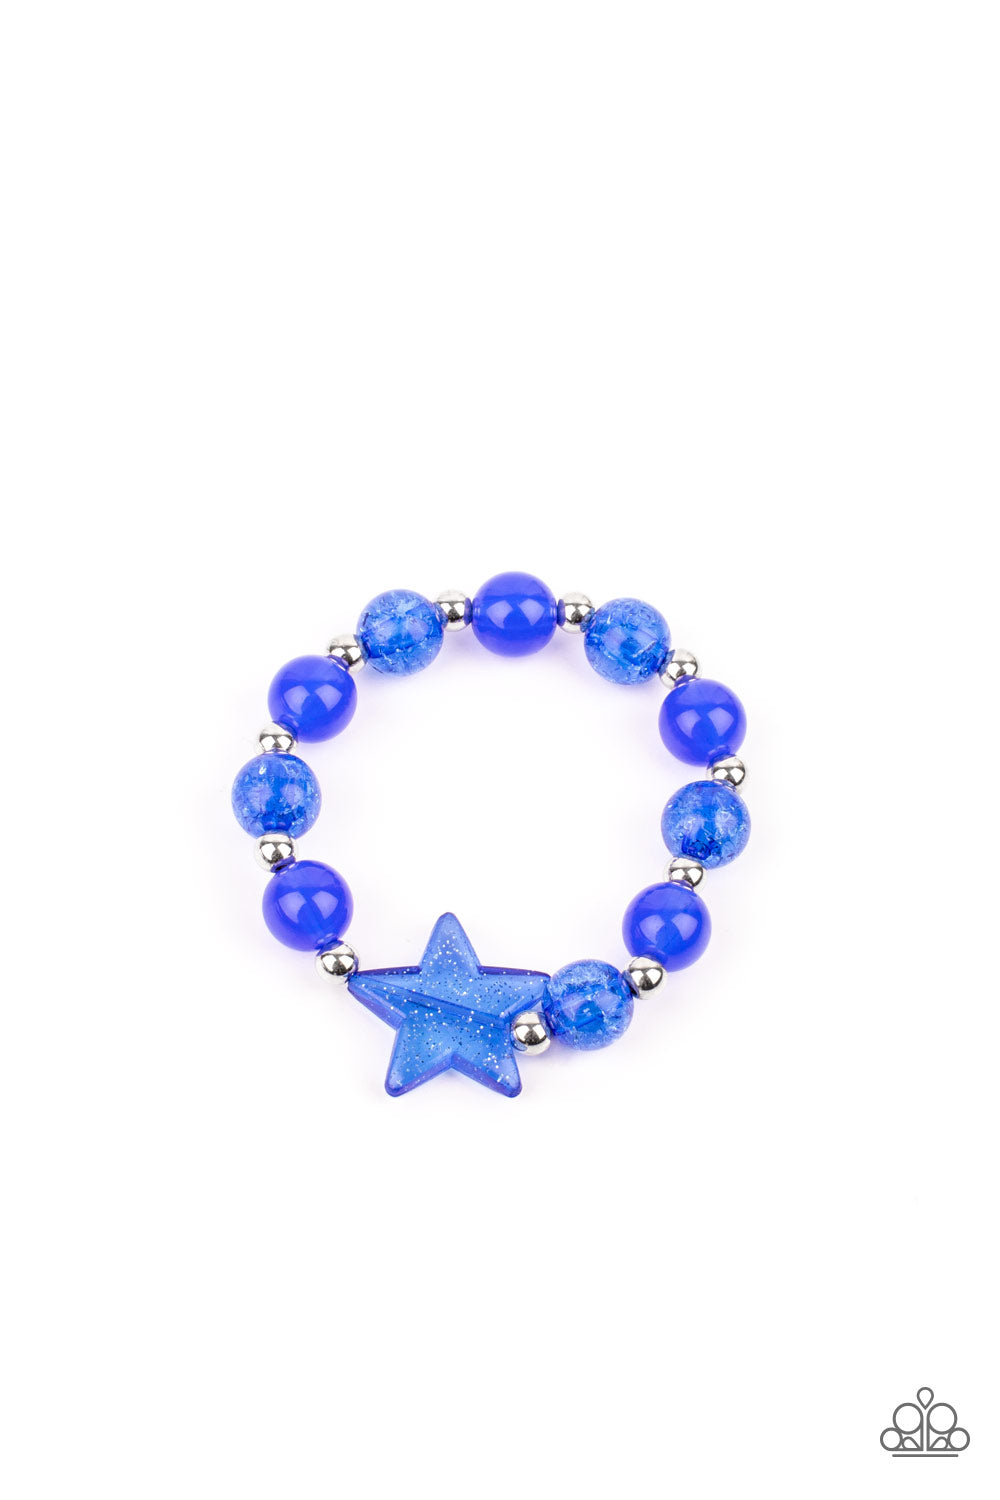 Starlette Bralette in Blue Sparkly Jewel